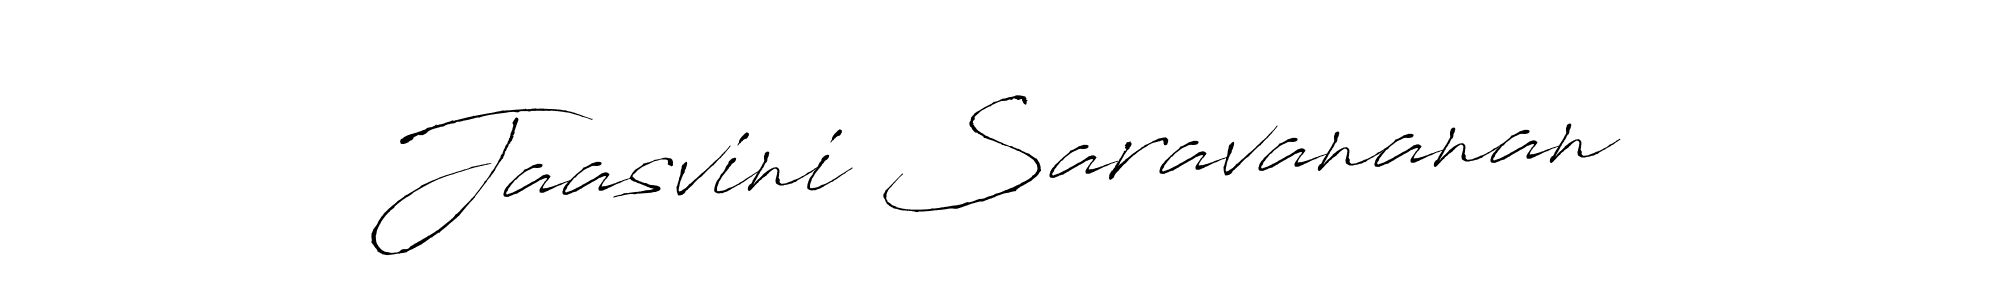 How to Draw Jaasvini Saravananan signature style? Antro_Vectra is a latest design signature styles for name Jaasvini Saravananan. Jaasvini Saravananan signature style 6 images and pictures png